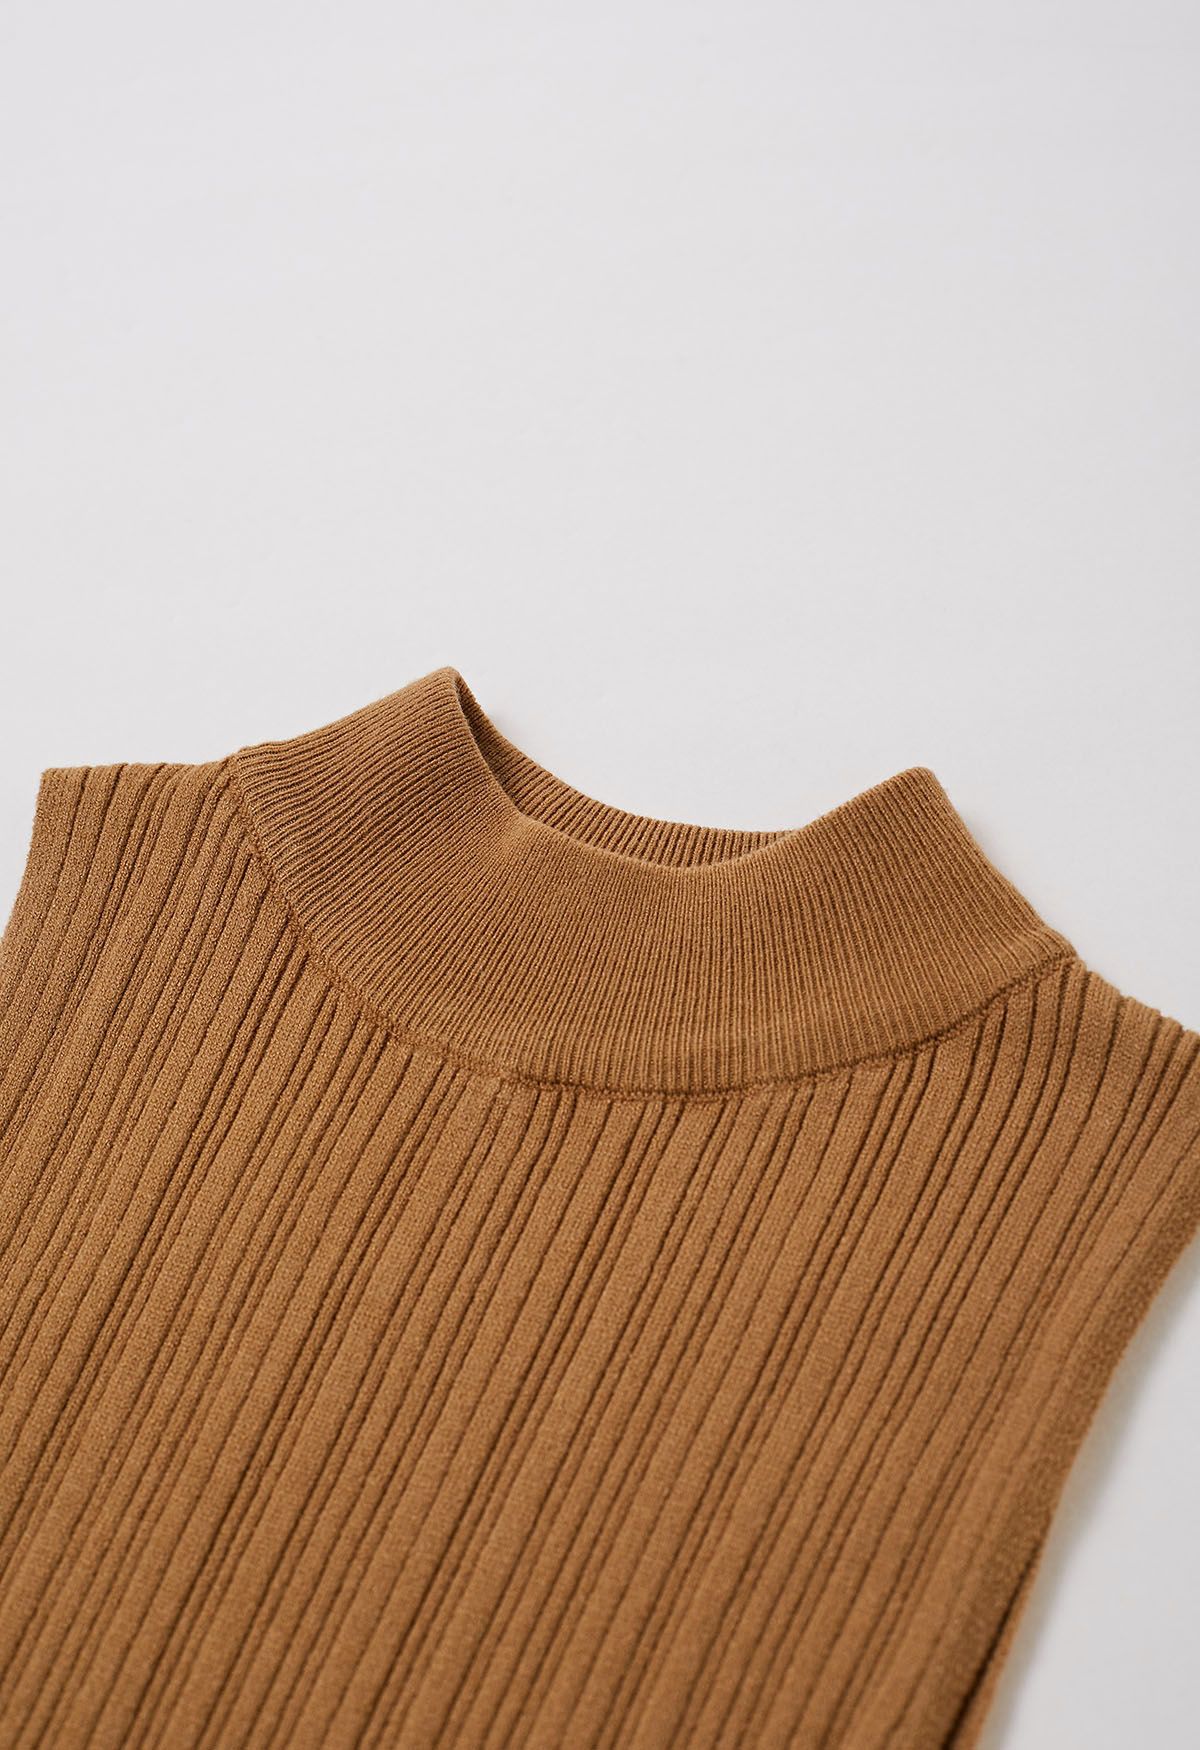 Ultra-Flattering Bodycon Knit Maxi Dress in Caramel